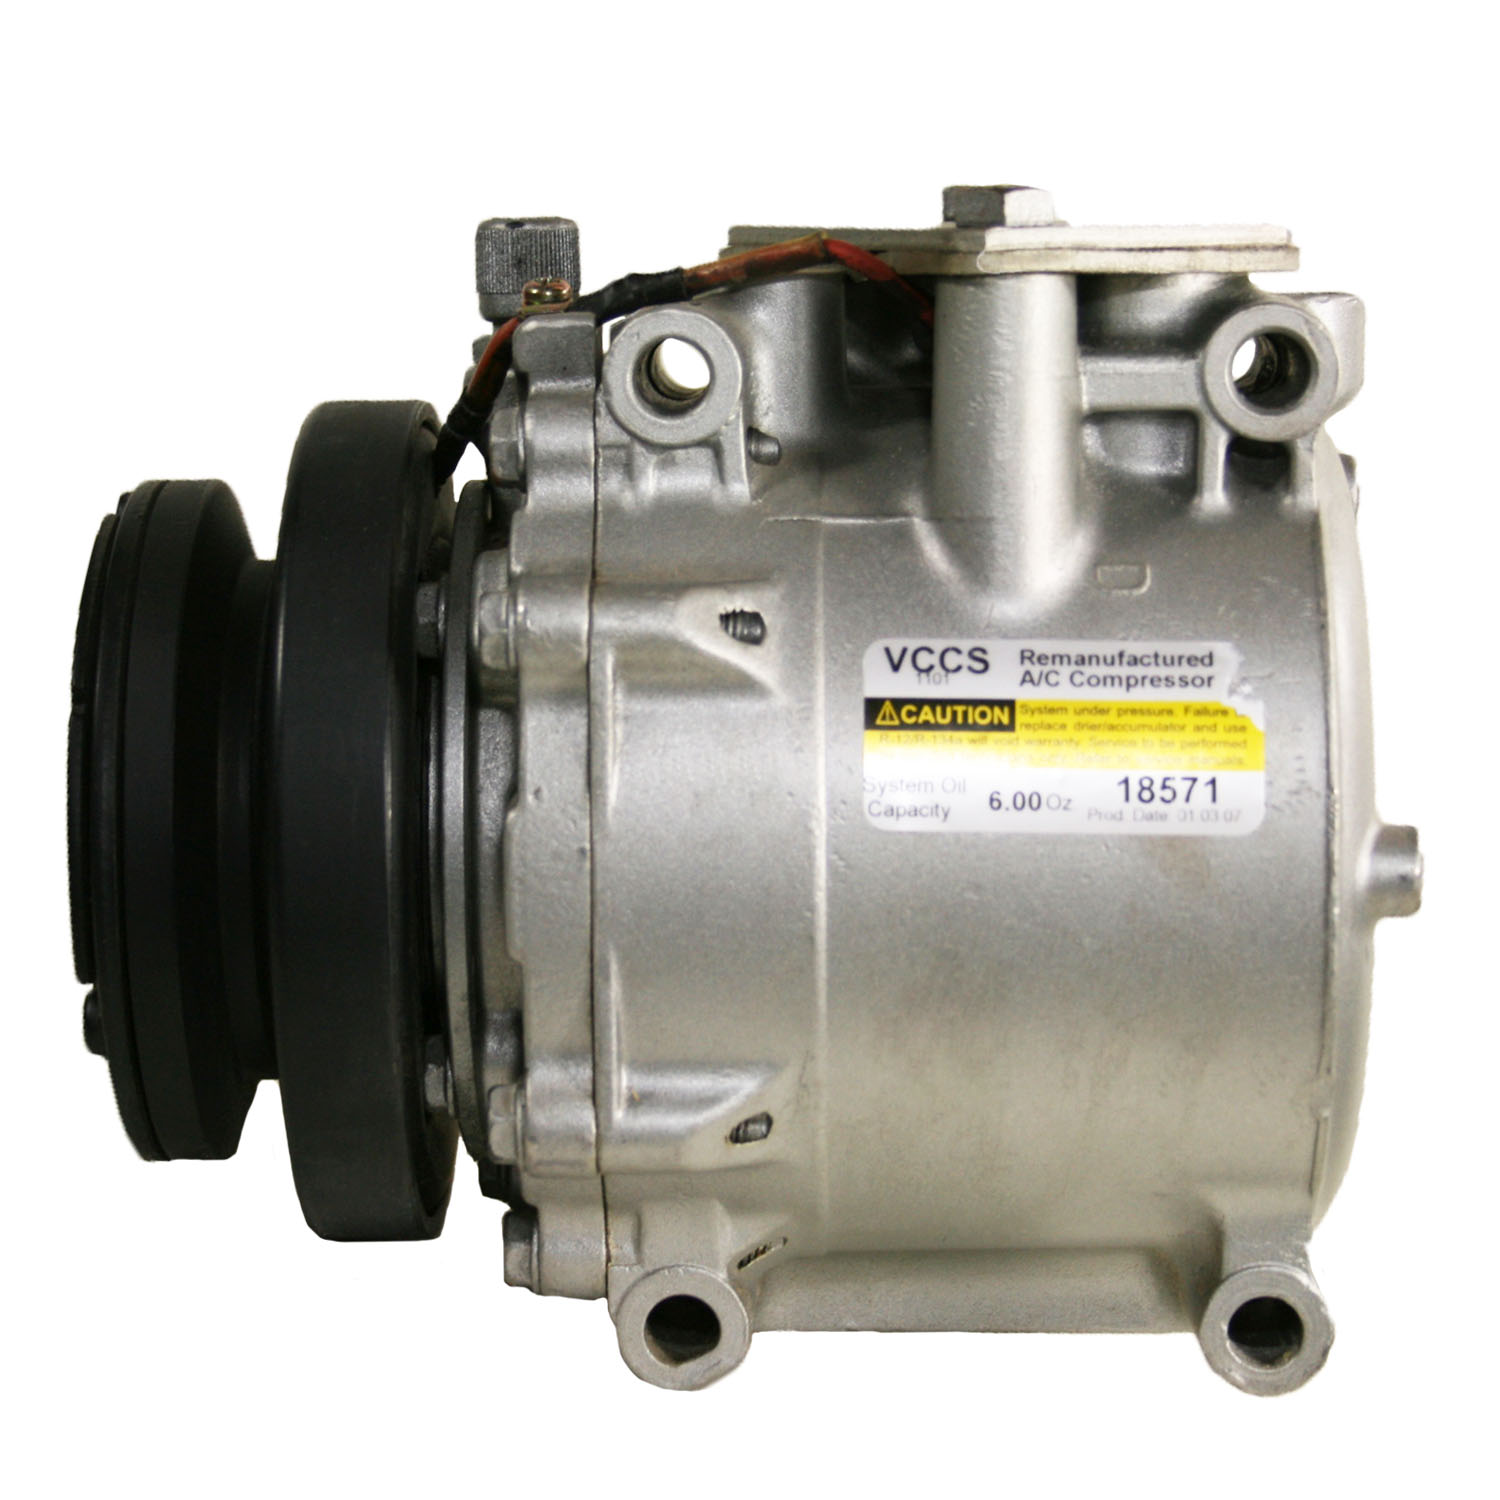 TCW Compressor 40800.101 Remanufactured